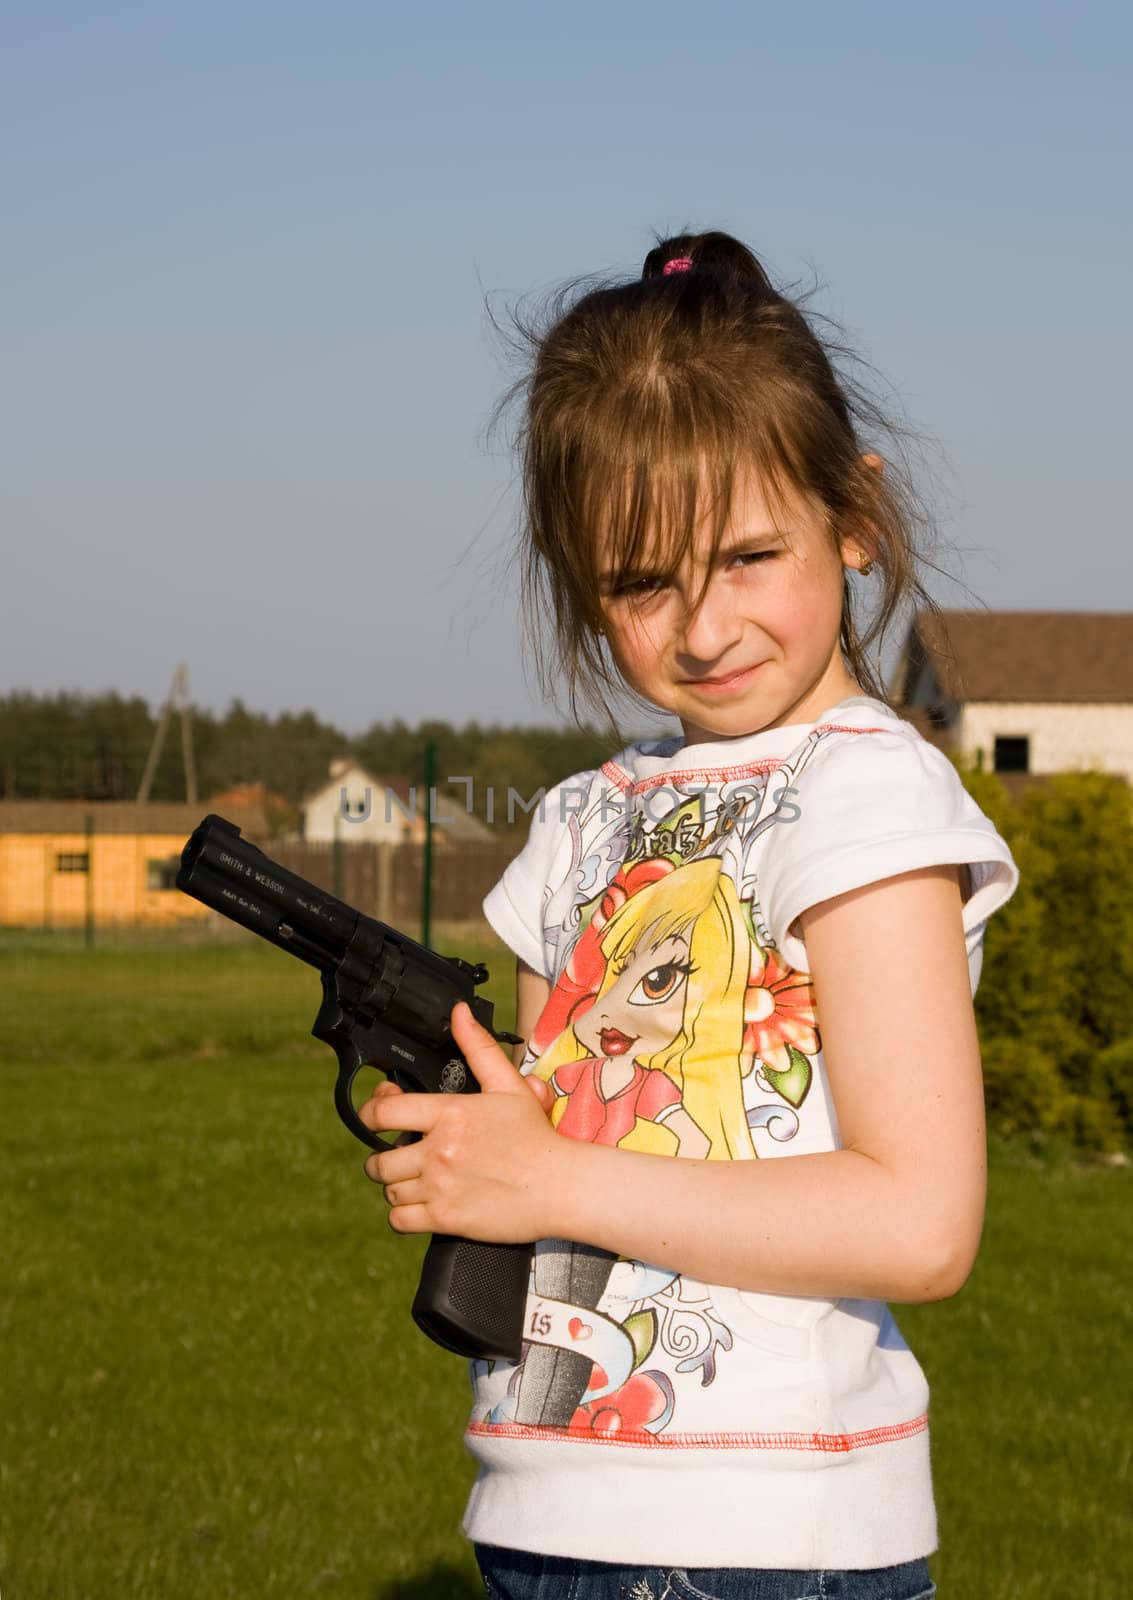 girl with gun